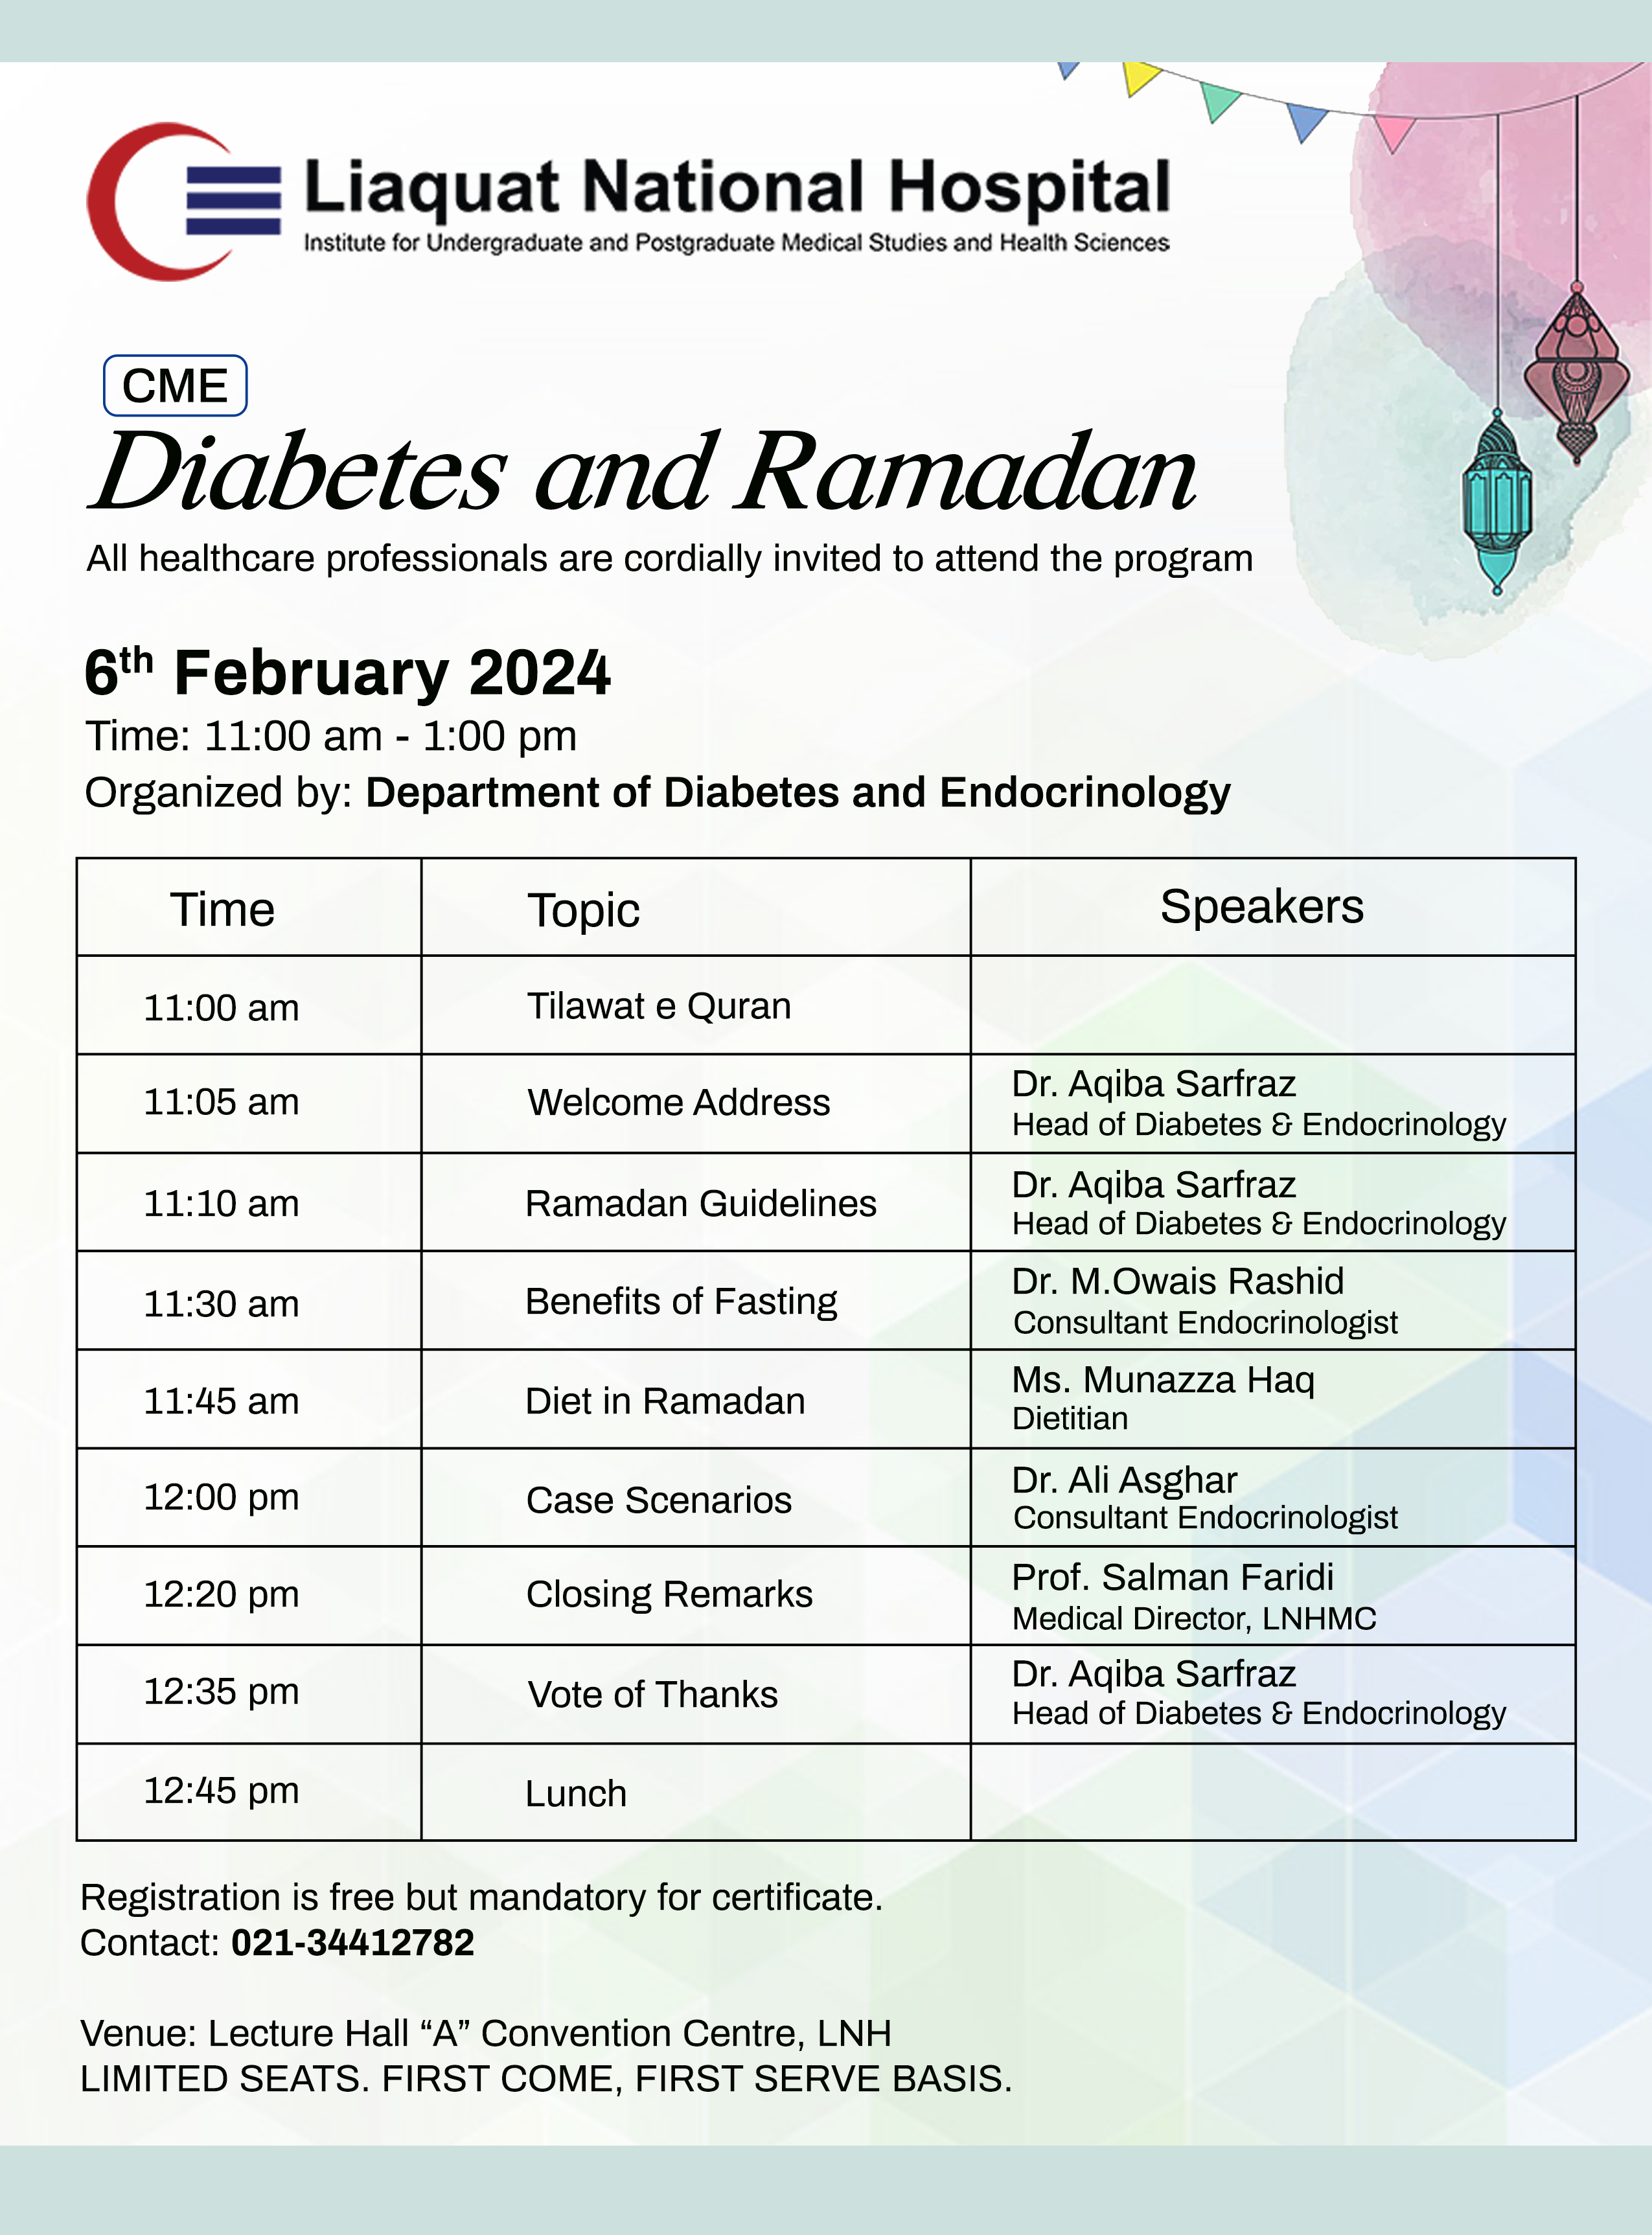 CME on "Diabetes and Ramadan"